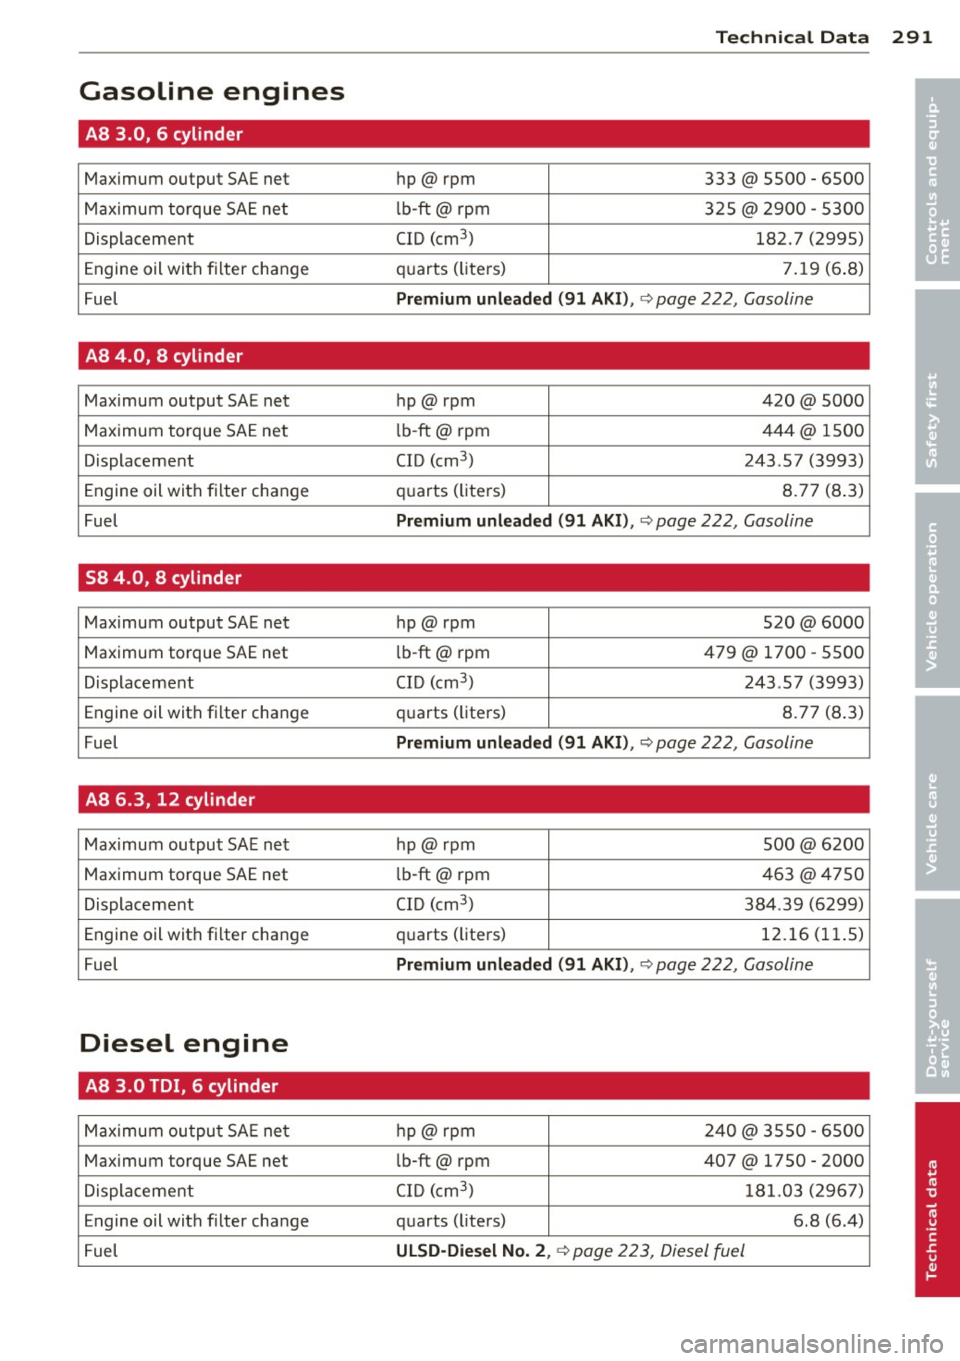 AUDI S8 2014  Owners Manual Technical  Dat a 291 
Gasoline  engines 
• 
AB 3.0,  6  cylinder • 
Maximum  output  SAE net  hp@rpm 333 @ 5500  -6500 
Maximum  torque  SAE net  lb-ft@  rpm  325@  2900  - 5300 
Displacement  CID